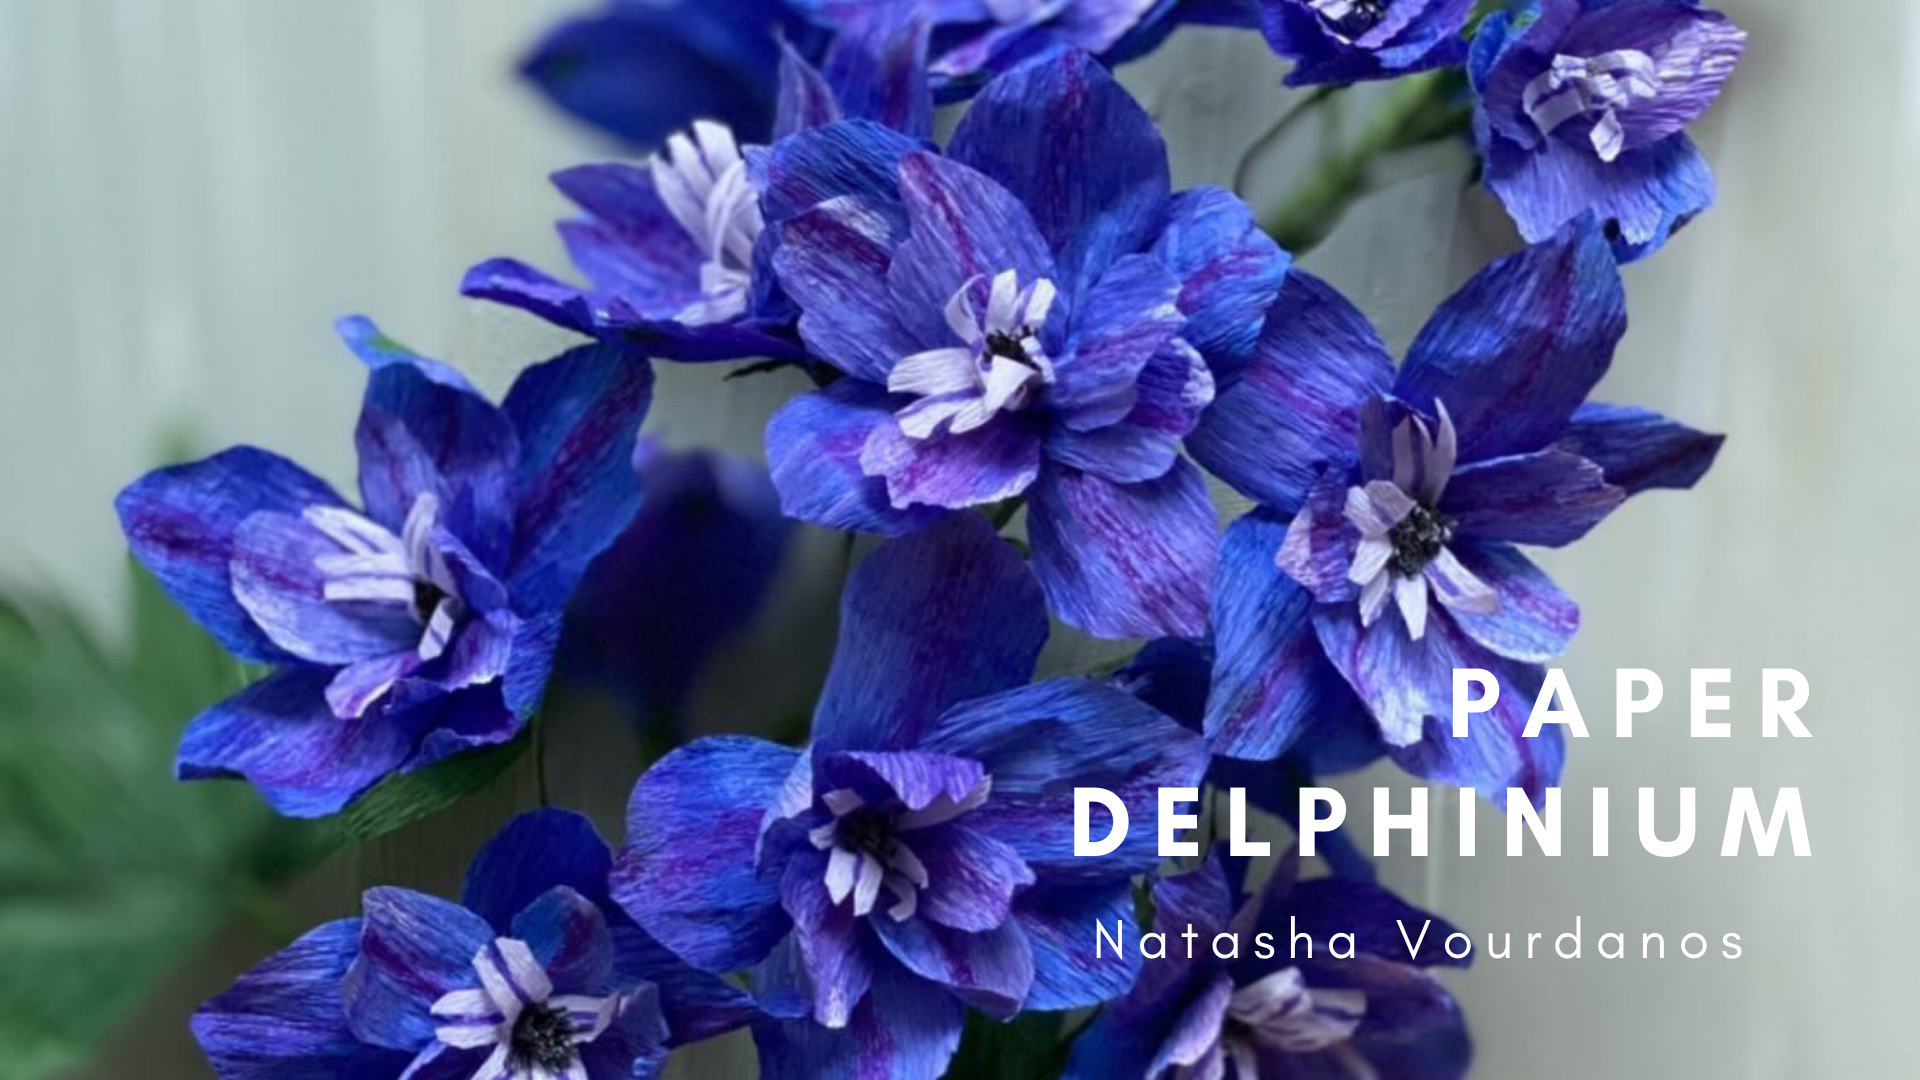 Paper Delphinium with Natasha Vourdanos | flower and jane